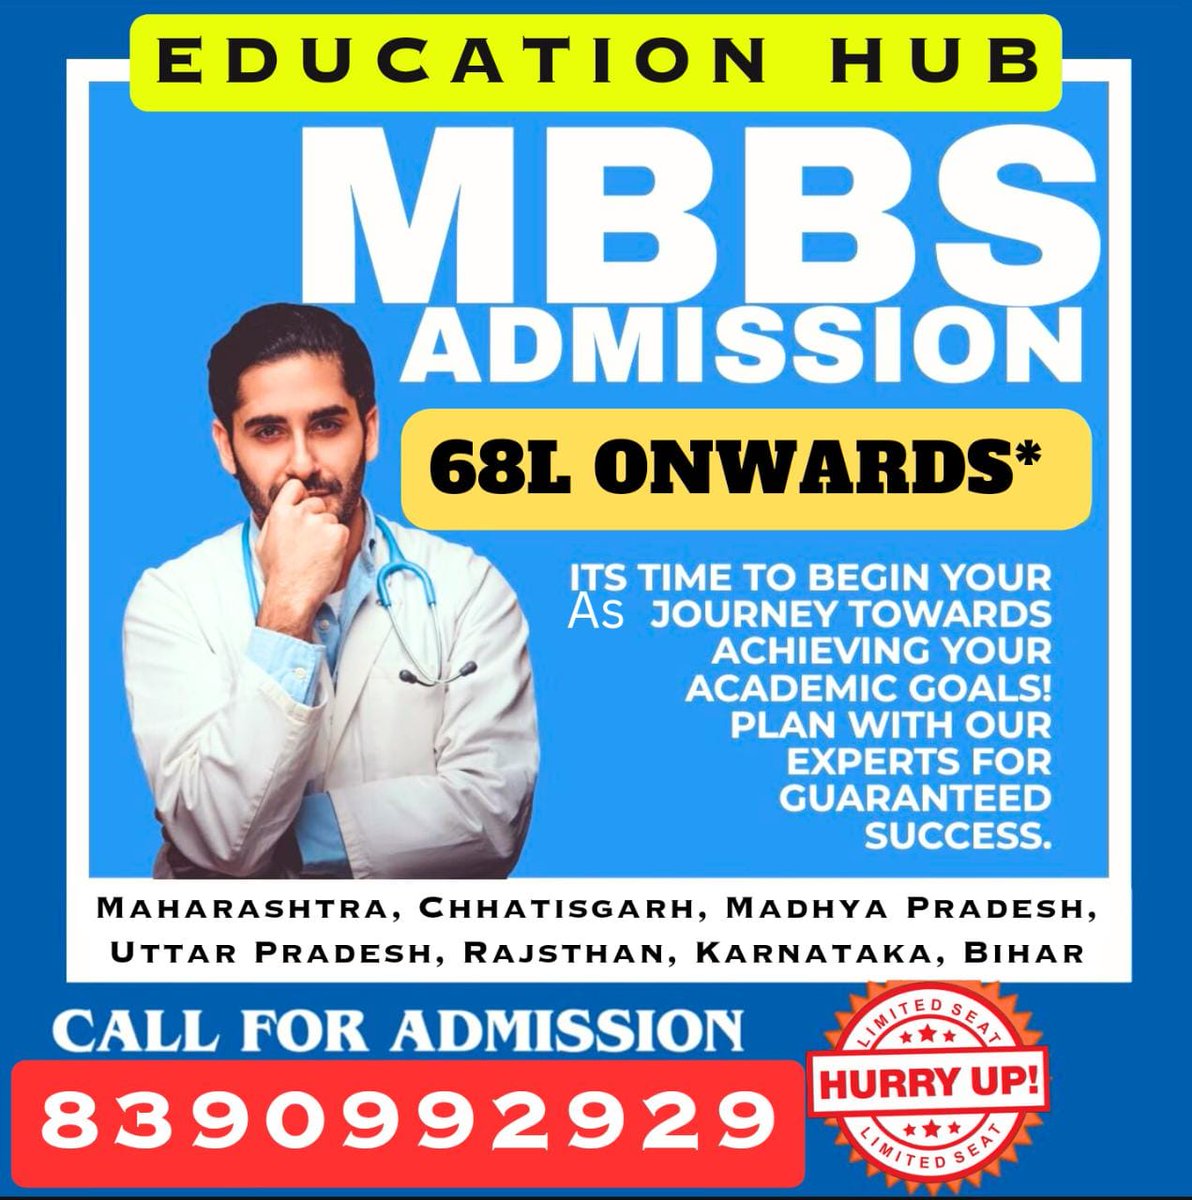 #MBBS 
#PrivateCollege
#DeemedUniversity
#Maharashtra 
#Chhattisgarh 
#MP
#UP
#Rajasthan
#Karnataka